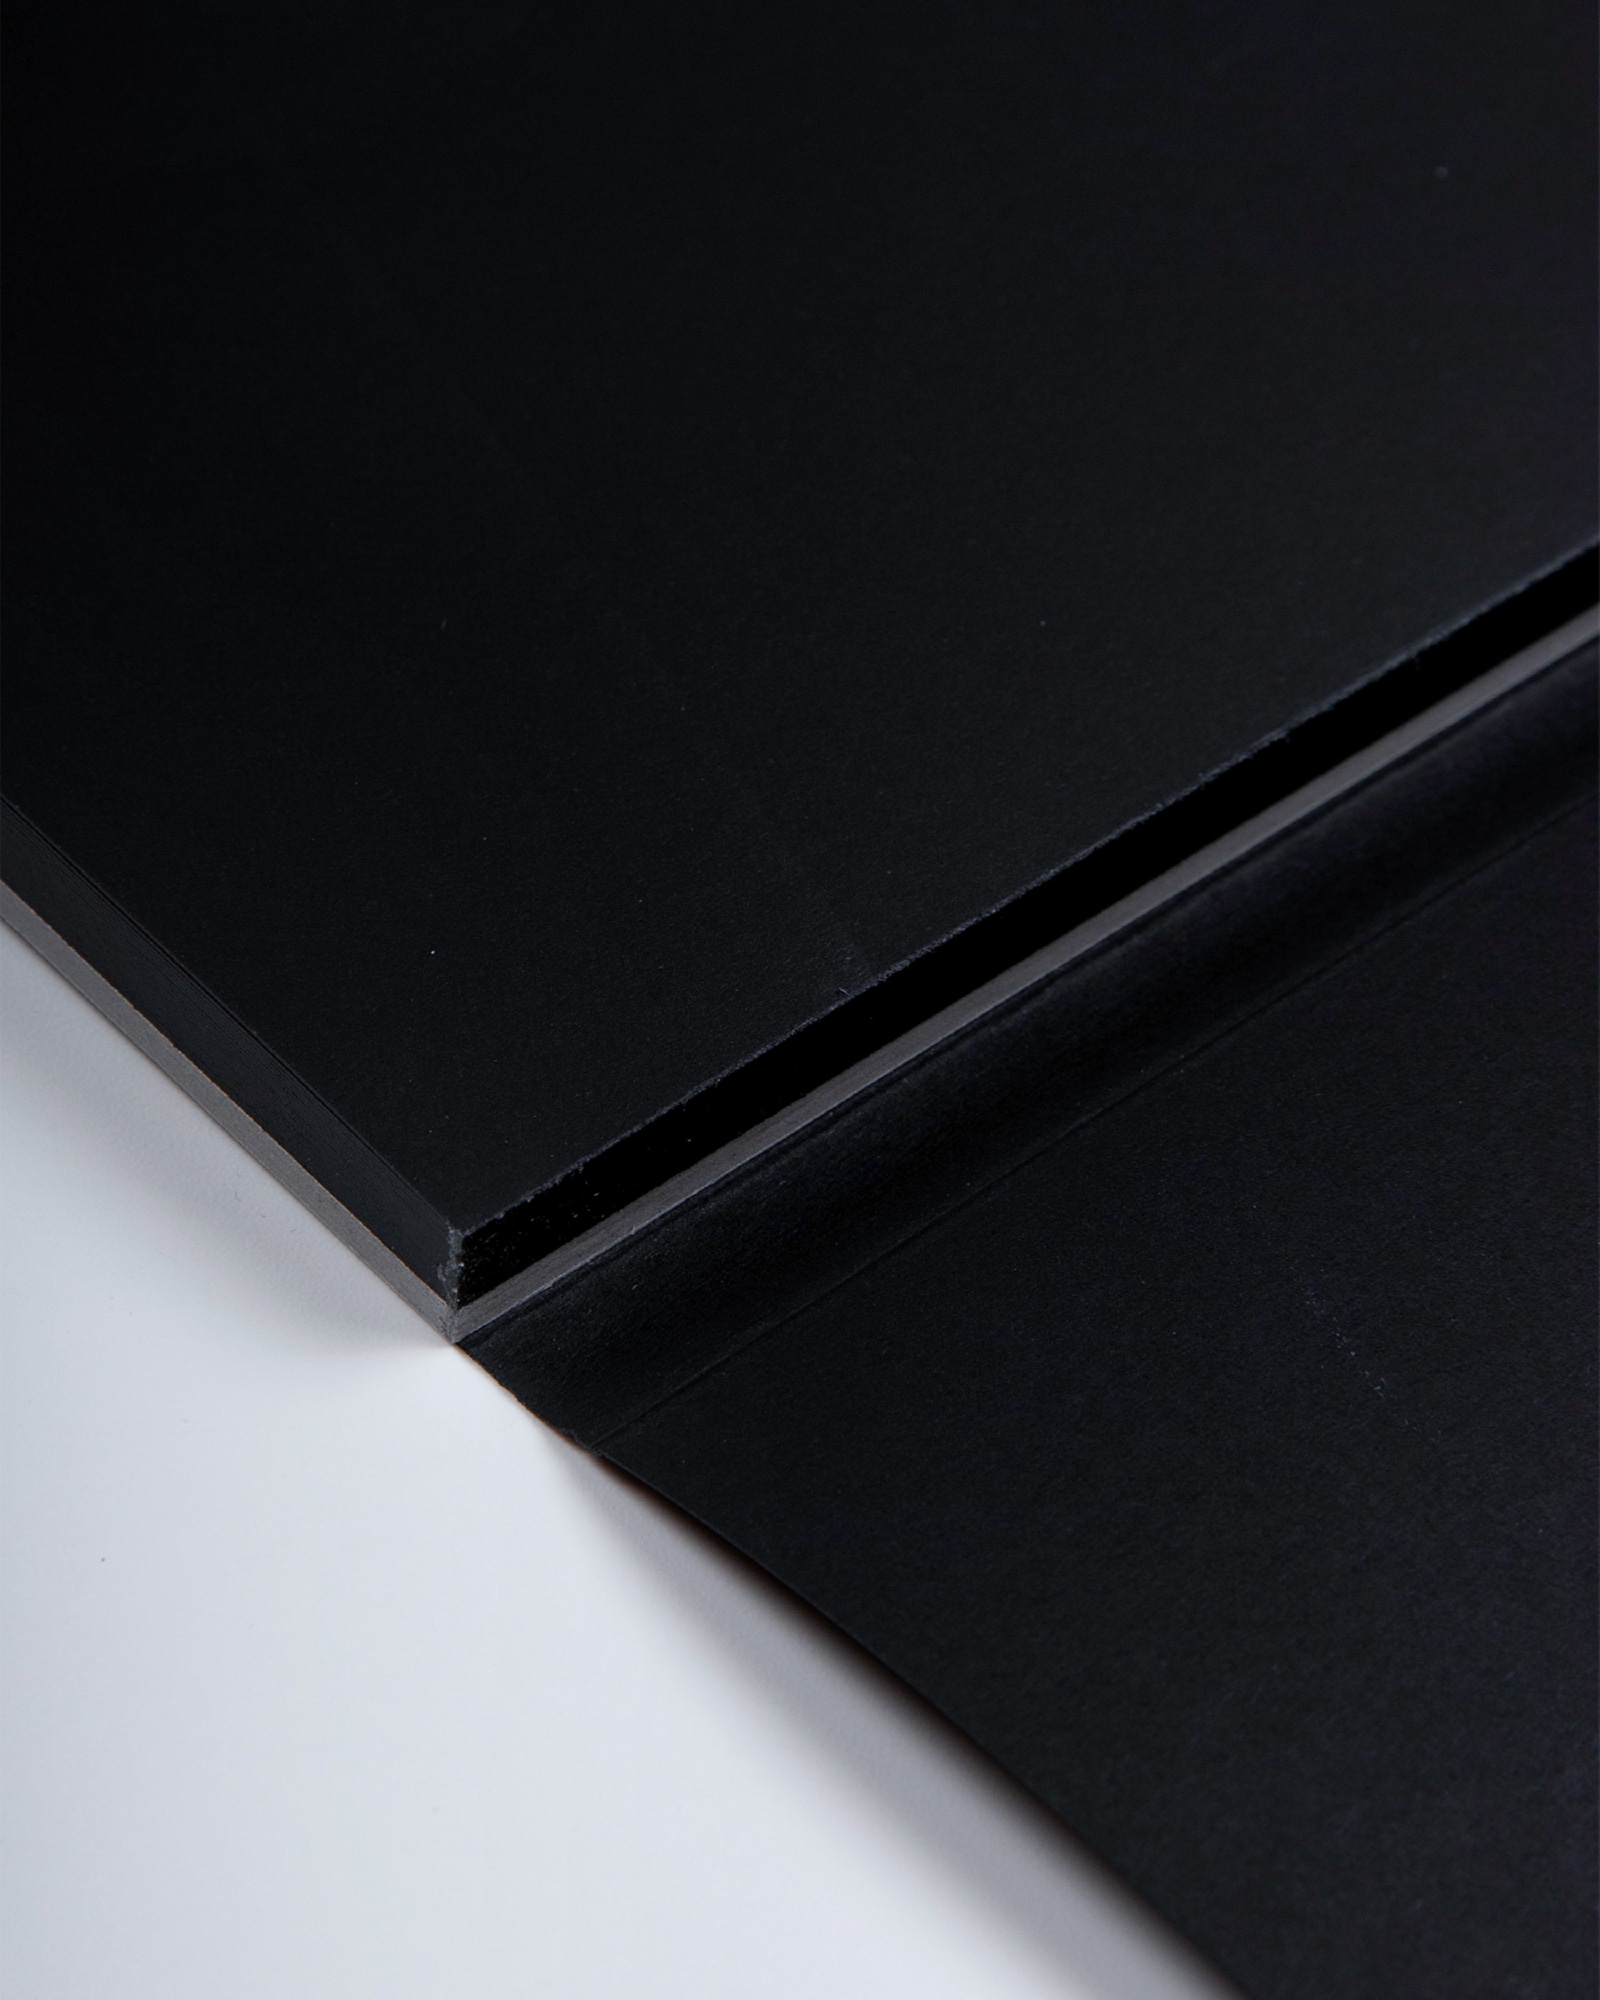 Альбом BlackBlack 21x29,7см 300грм склейка по короткой стороне 20л